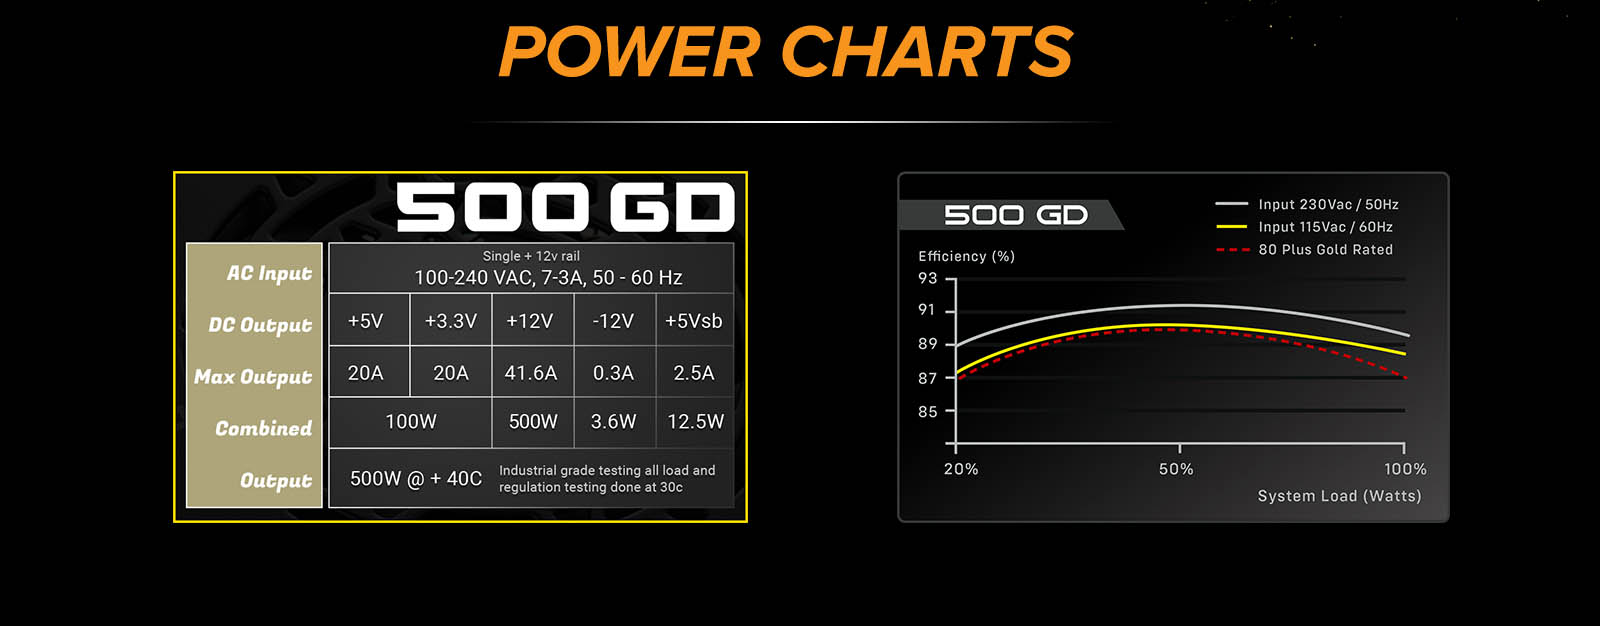 Power charts graph